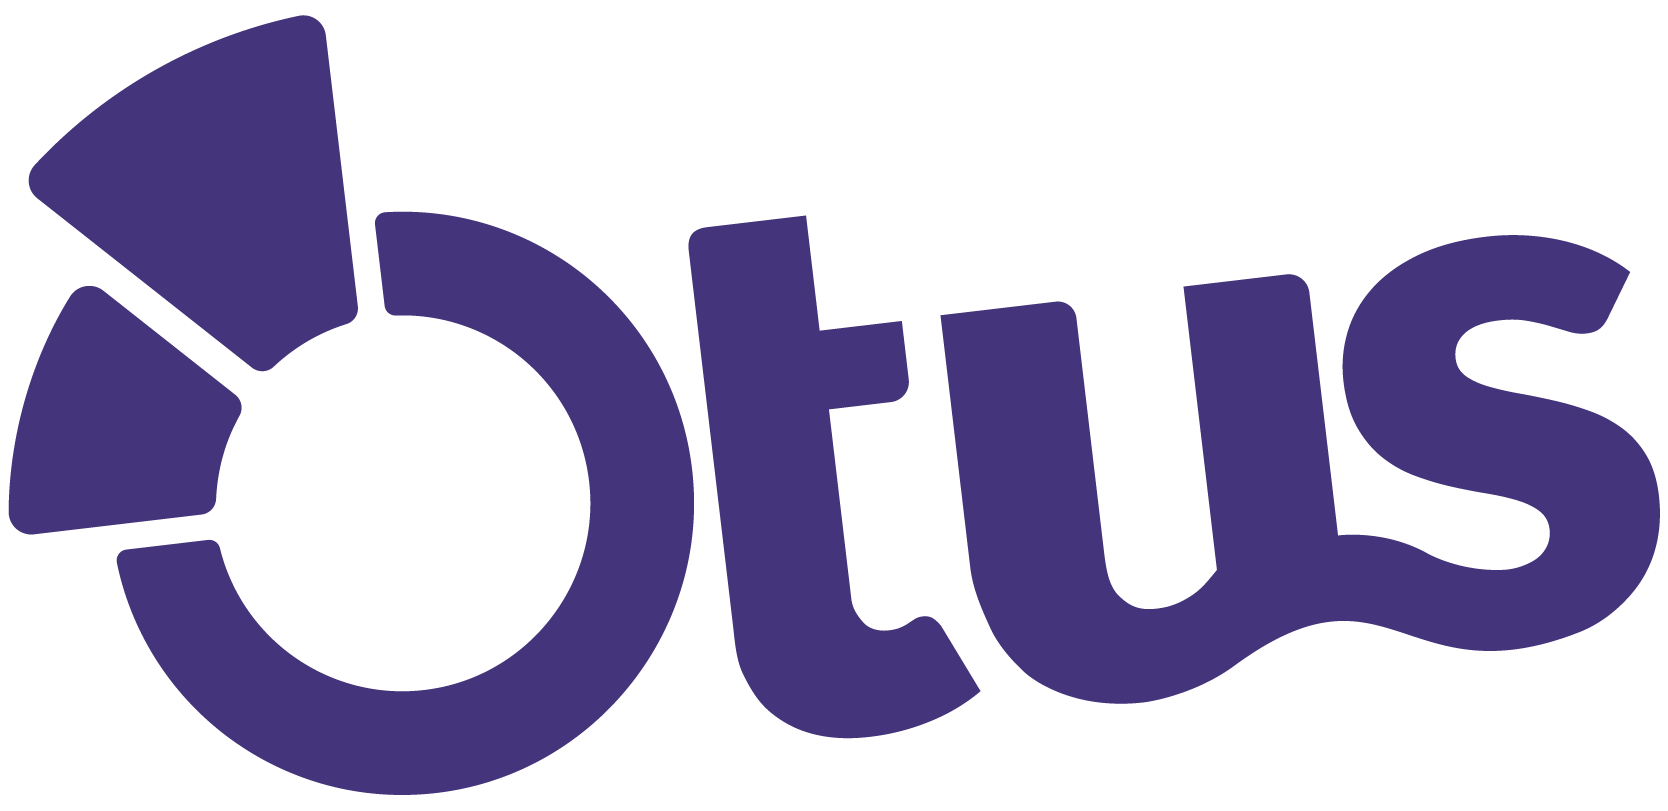 The Otus Dark Purple Logo without a tagline